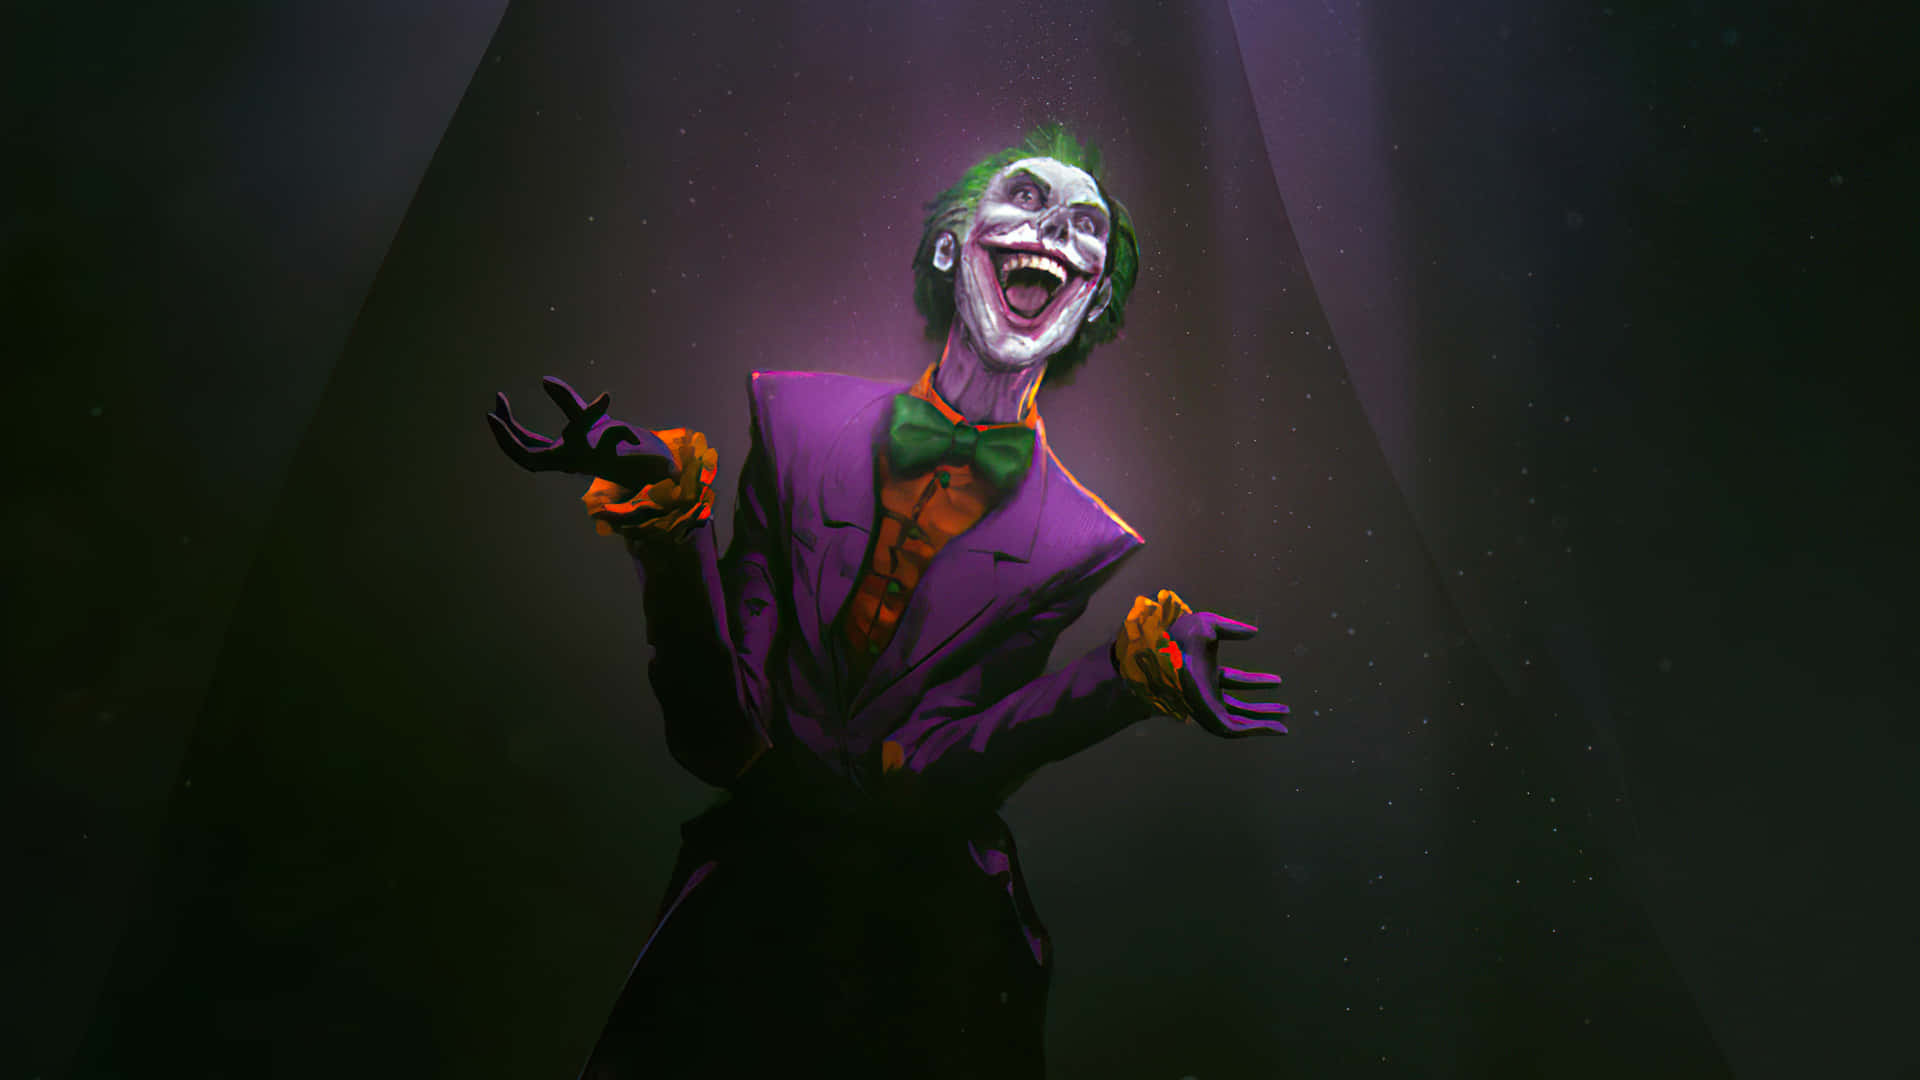 Download Maniacal Laugh of the Joker Wallpaper | Wallpapers.com